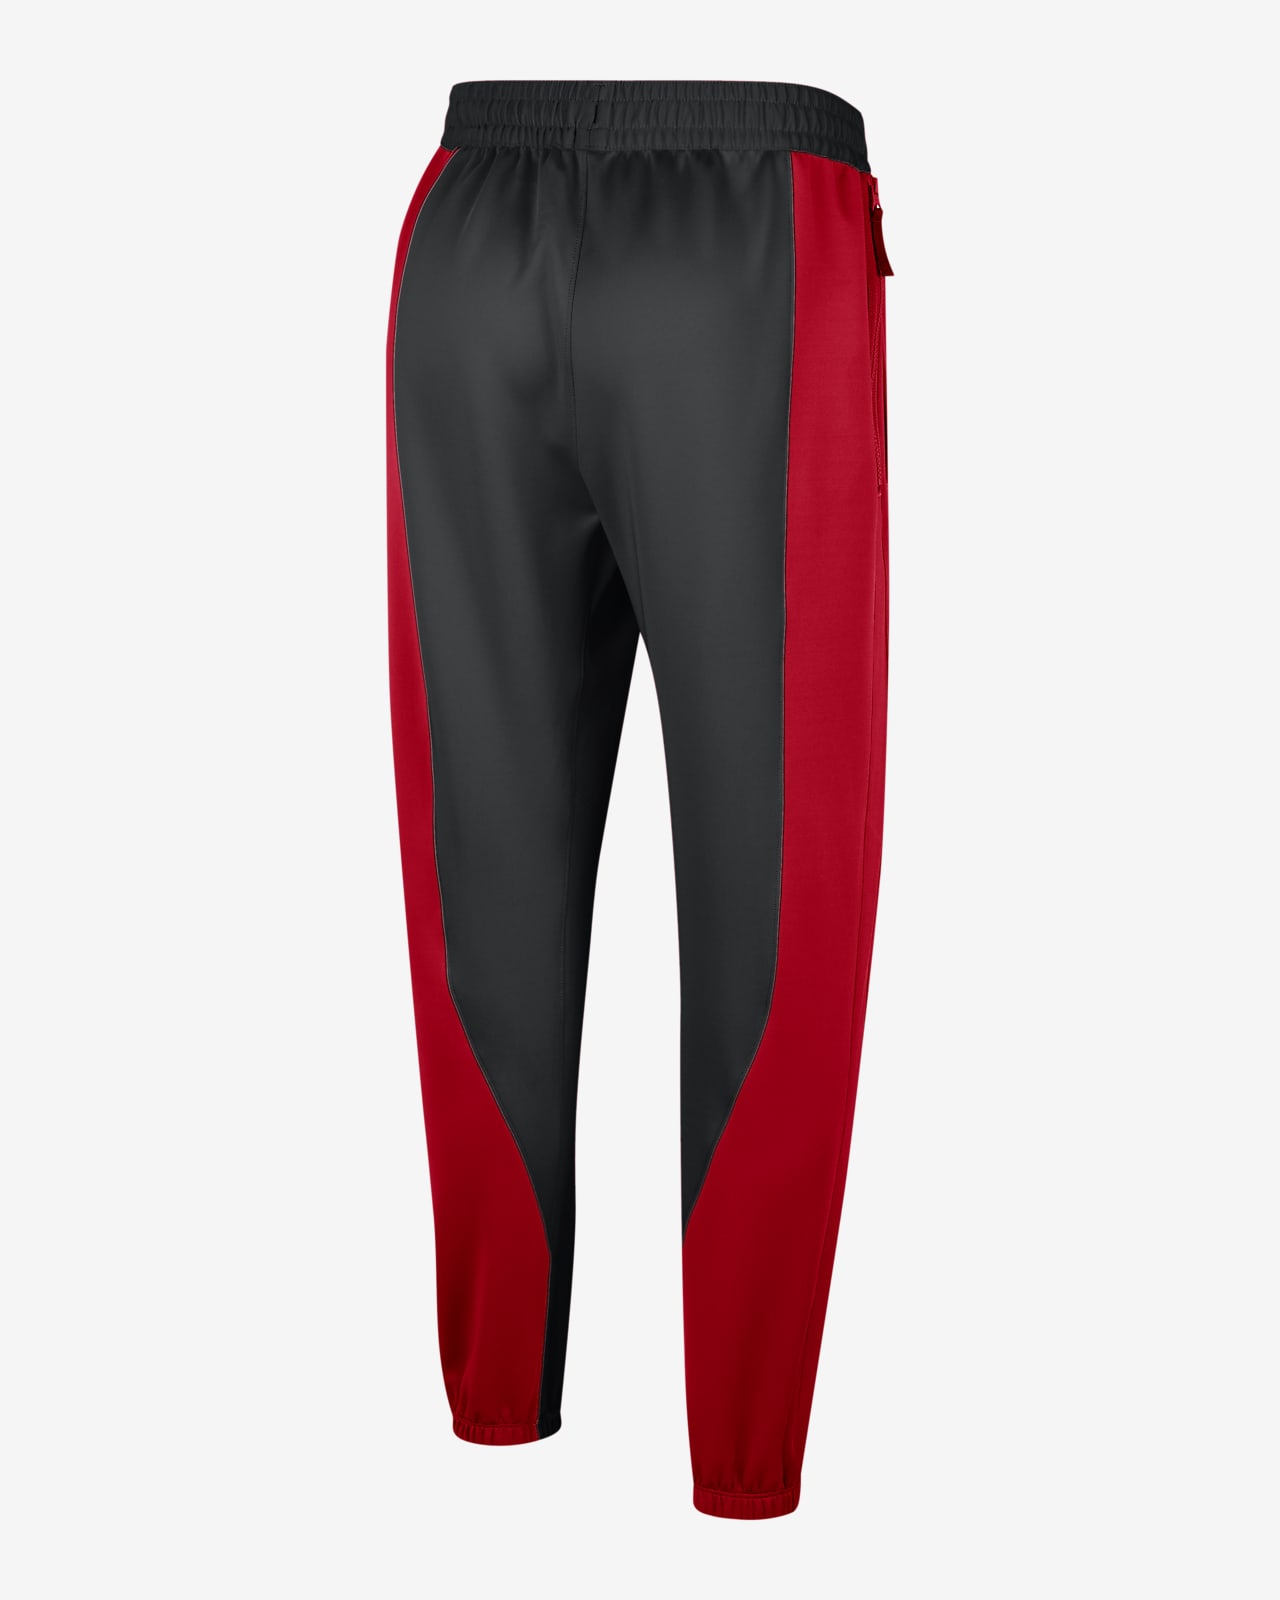 Official Logo Gear Pants, Leggings, Pajama Pants, Joggers | store.nba.com